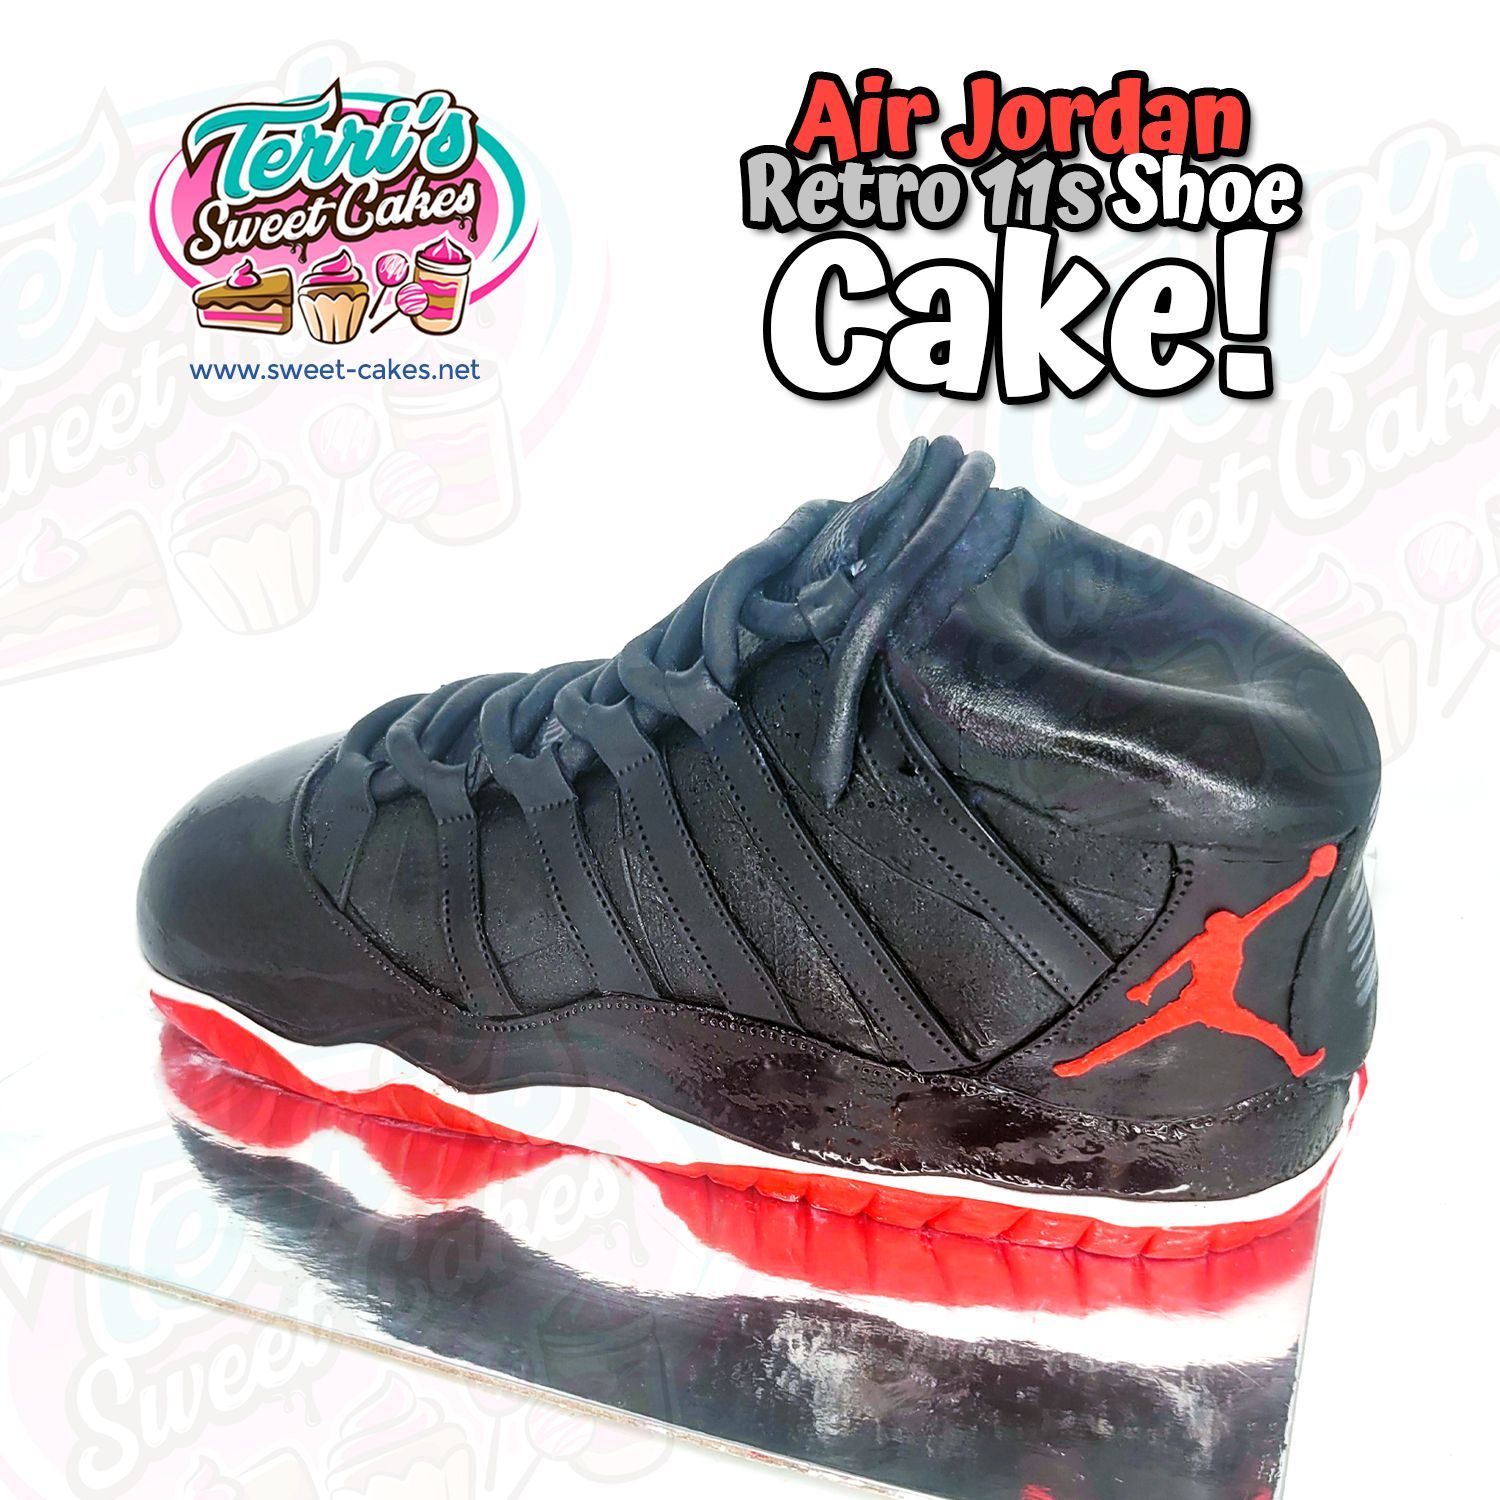 Air Jordan Retro 11 Birthday Cake by Terri's Sweet Cakes!